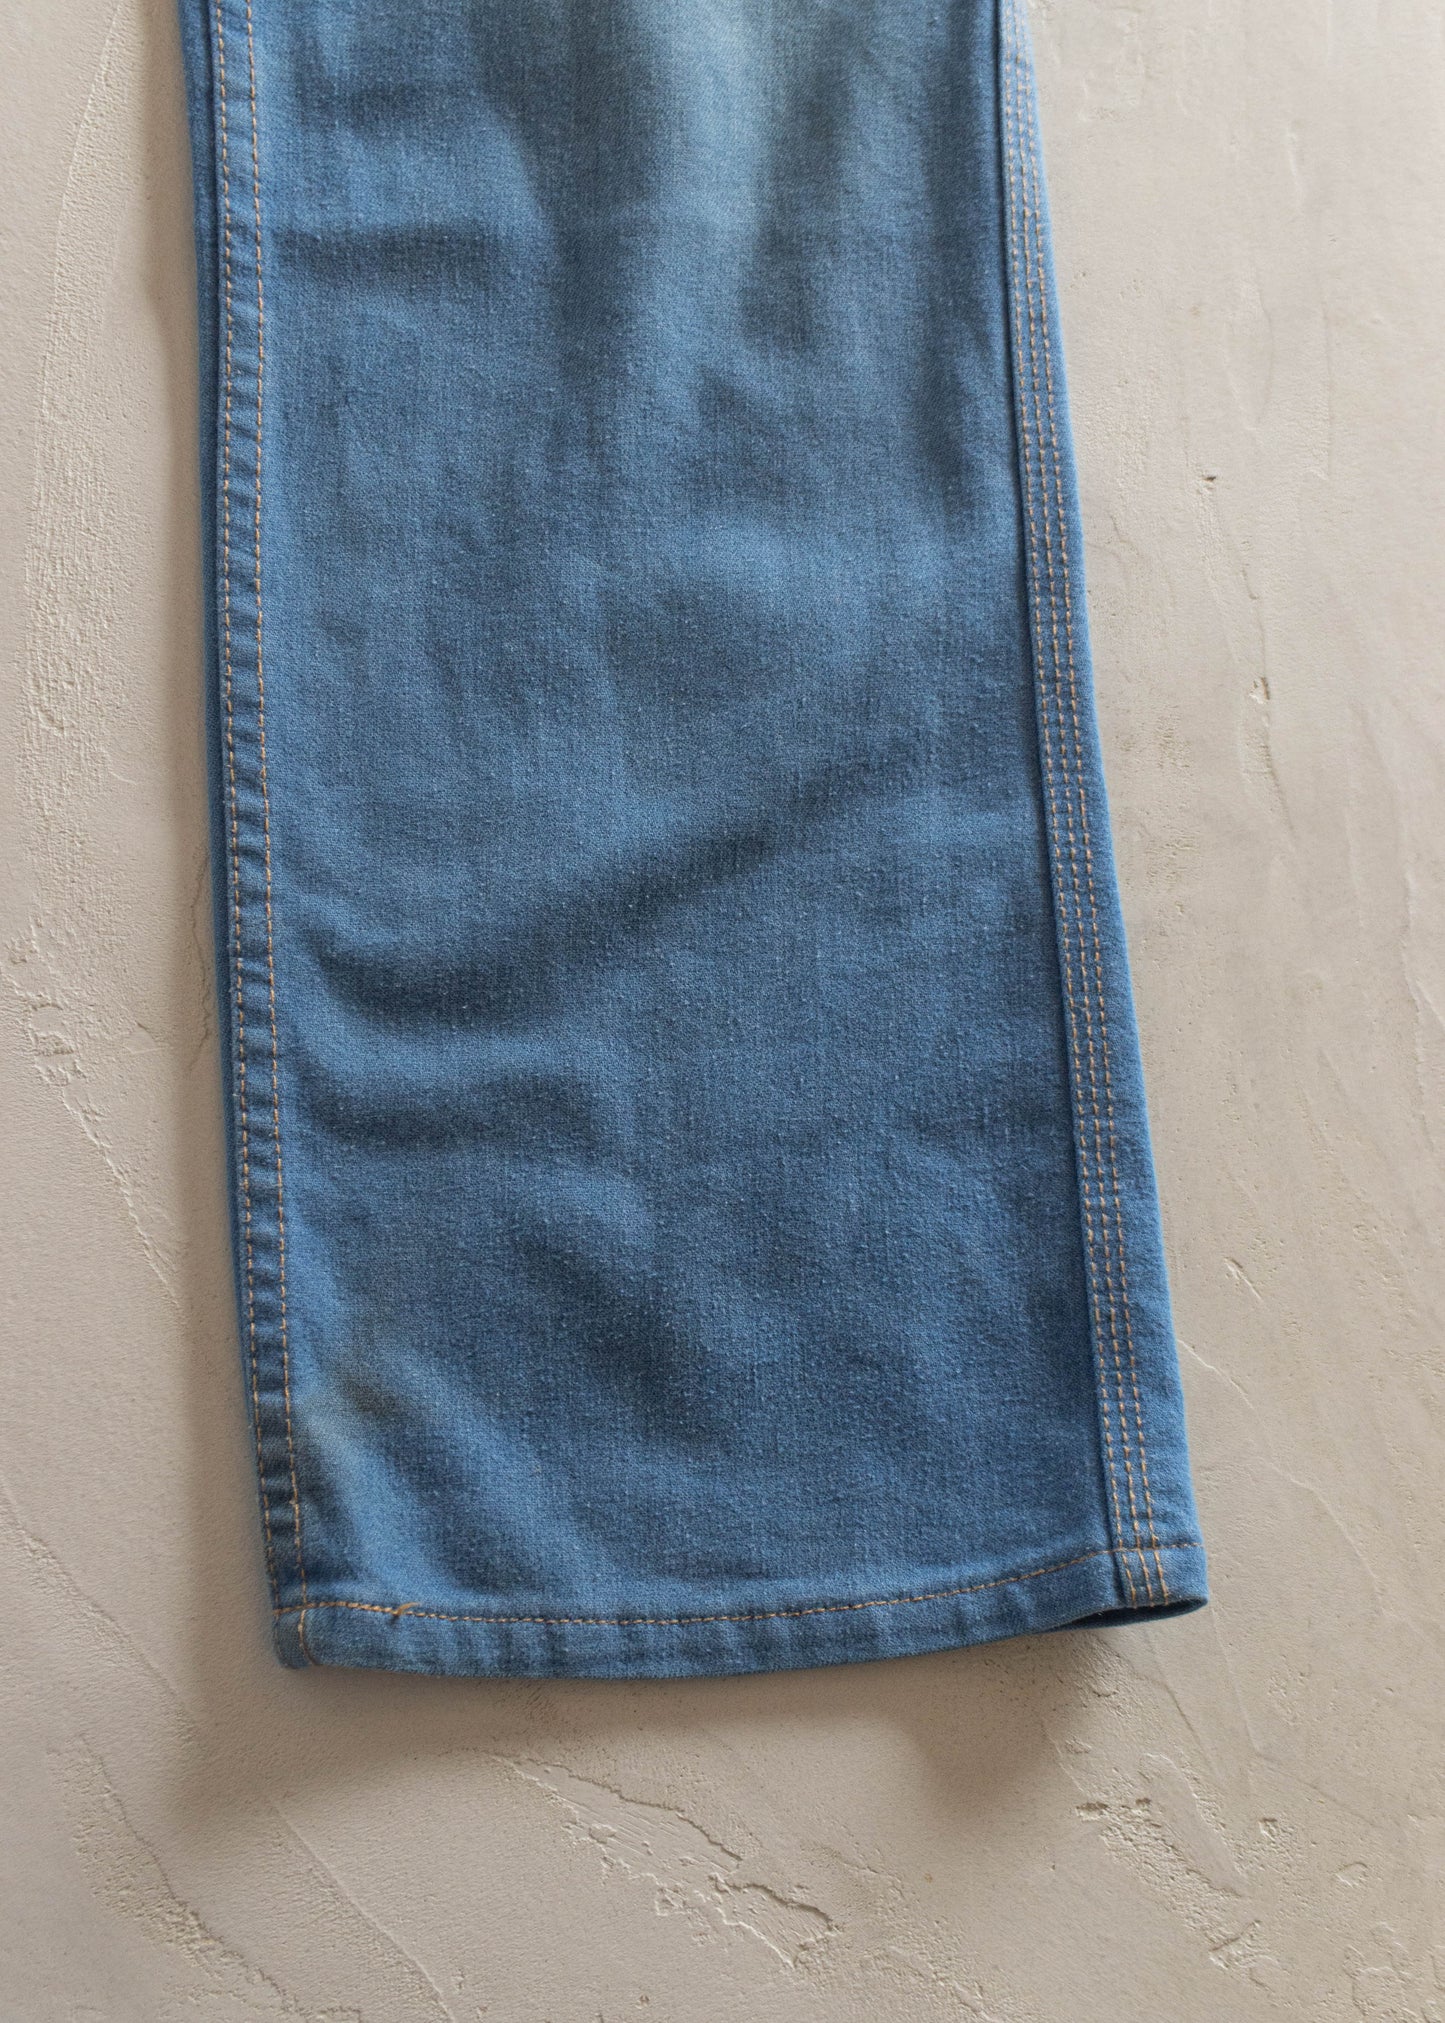 1980s Levi's Orange Tab Lightwash Jeans Size Women's 30 Men's 32